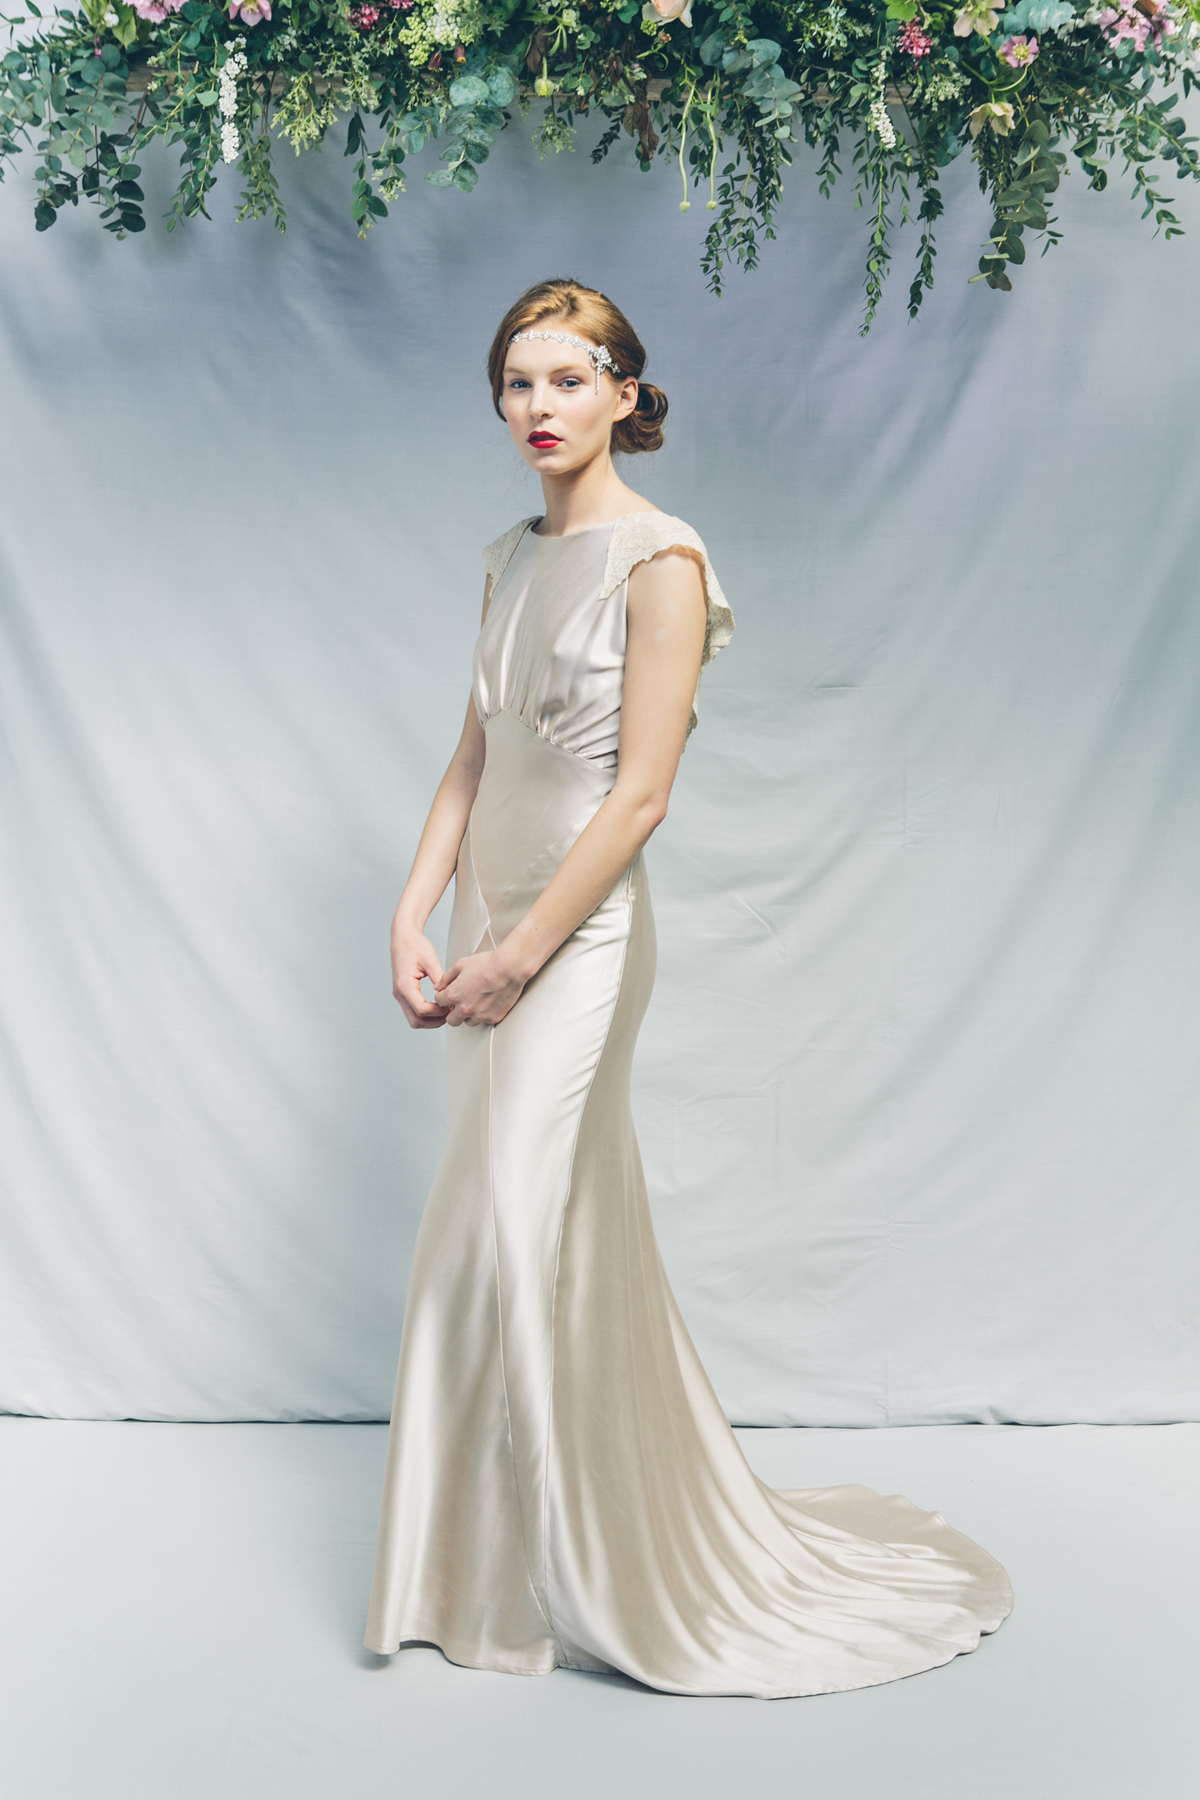 Kate Beaumont gold, vintage inspired wedding dress